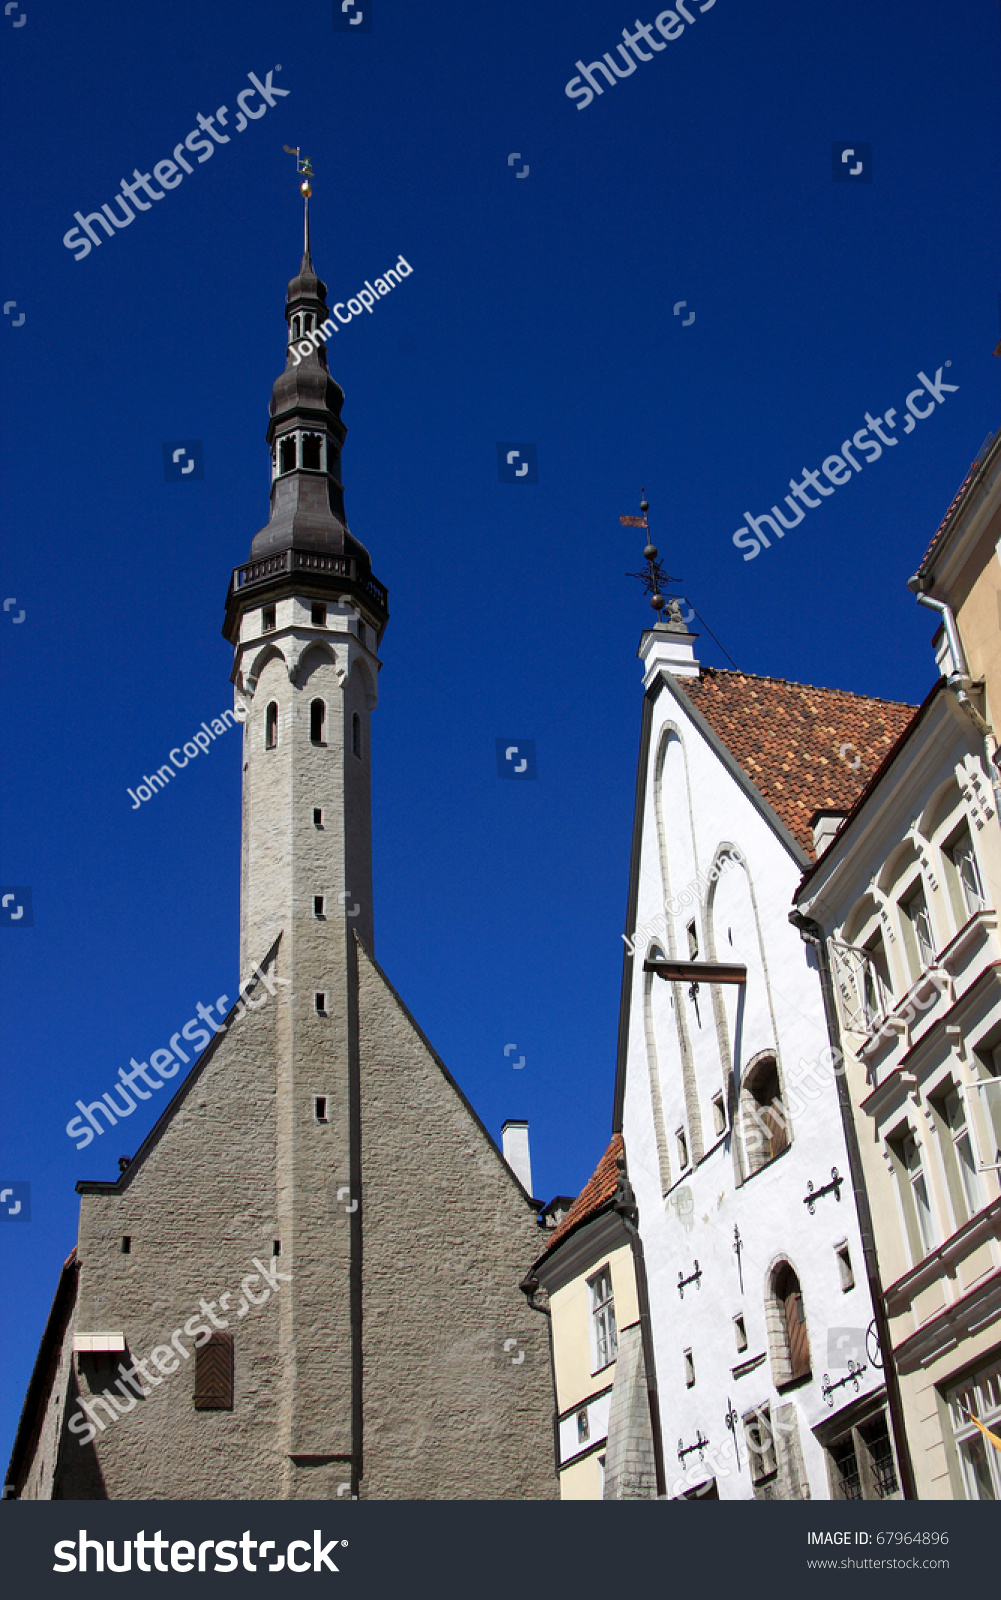 Estonia Tallinn Historic Center With Gable End Of Tall Church Spire And ...